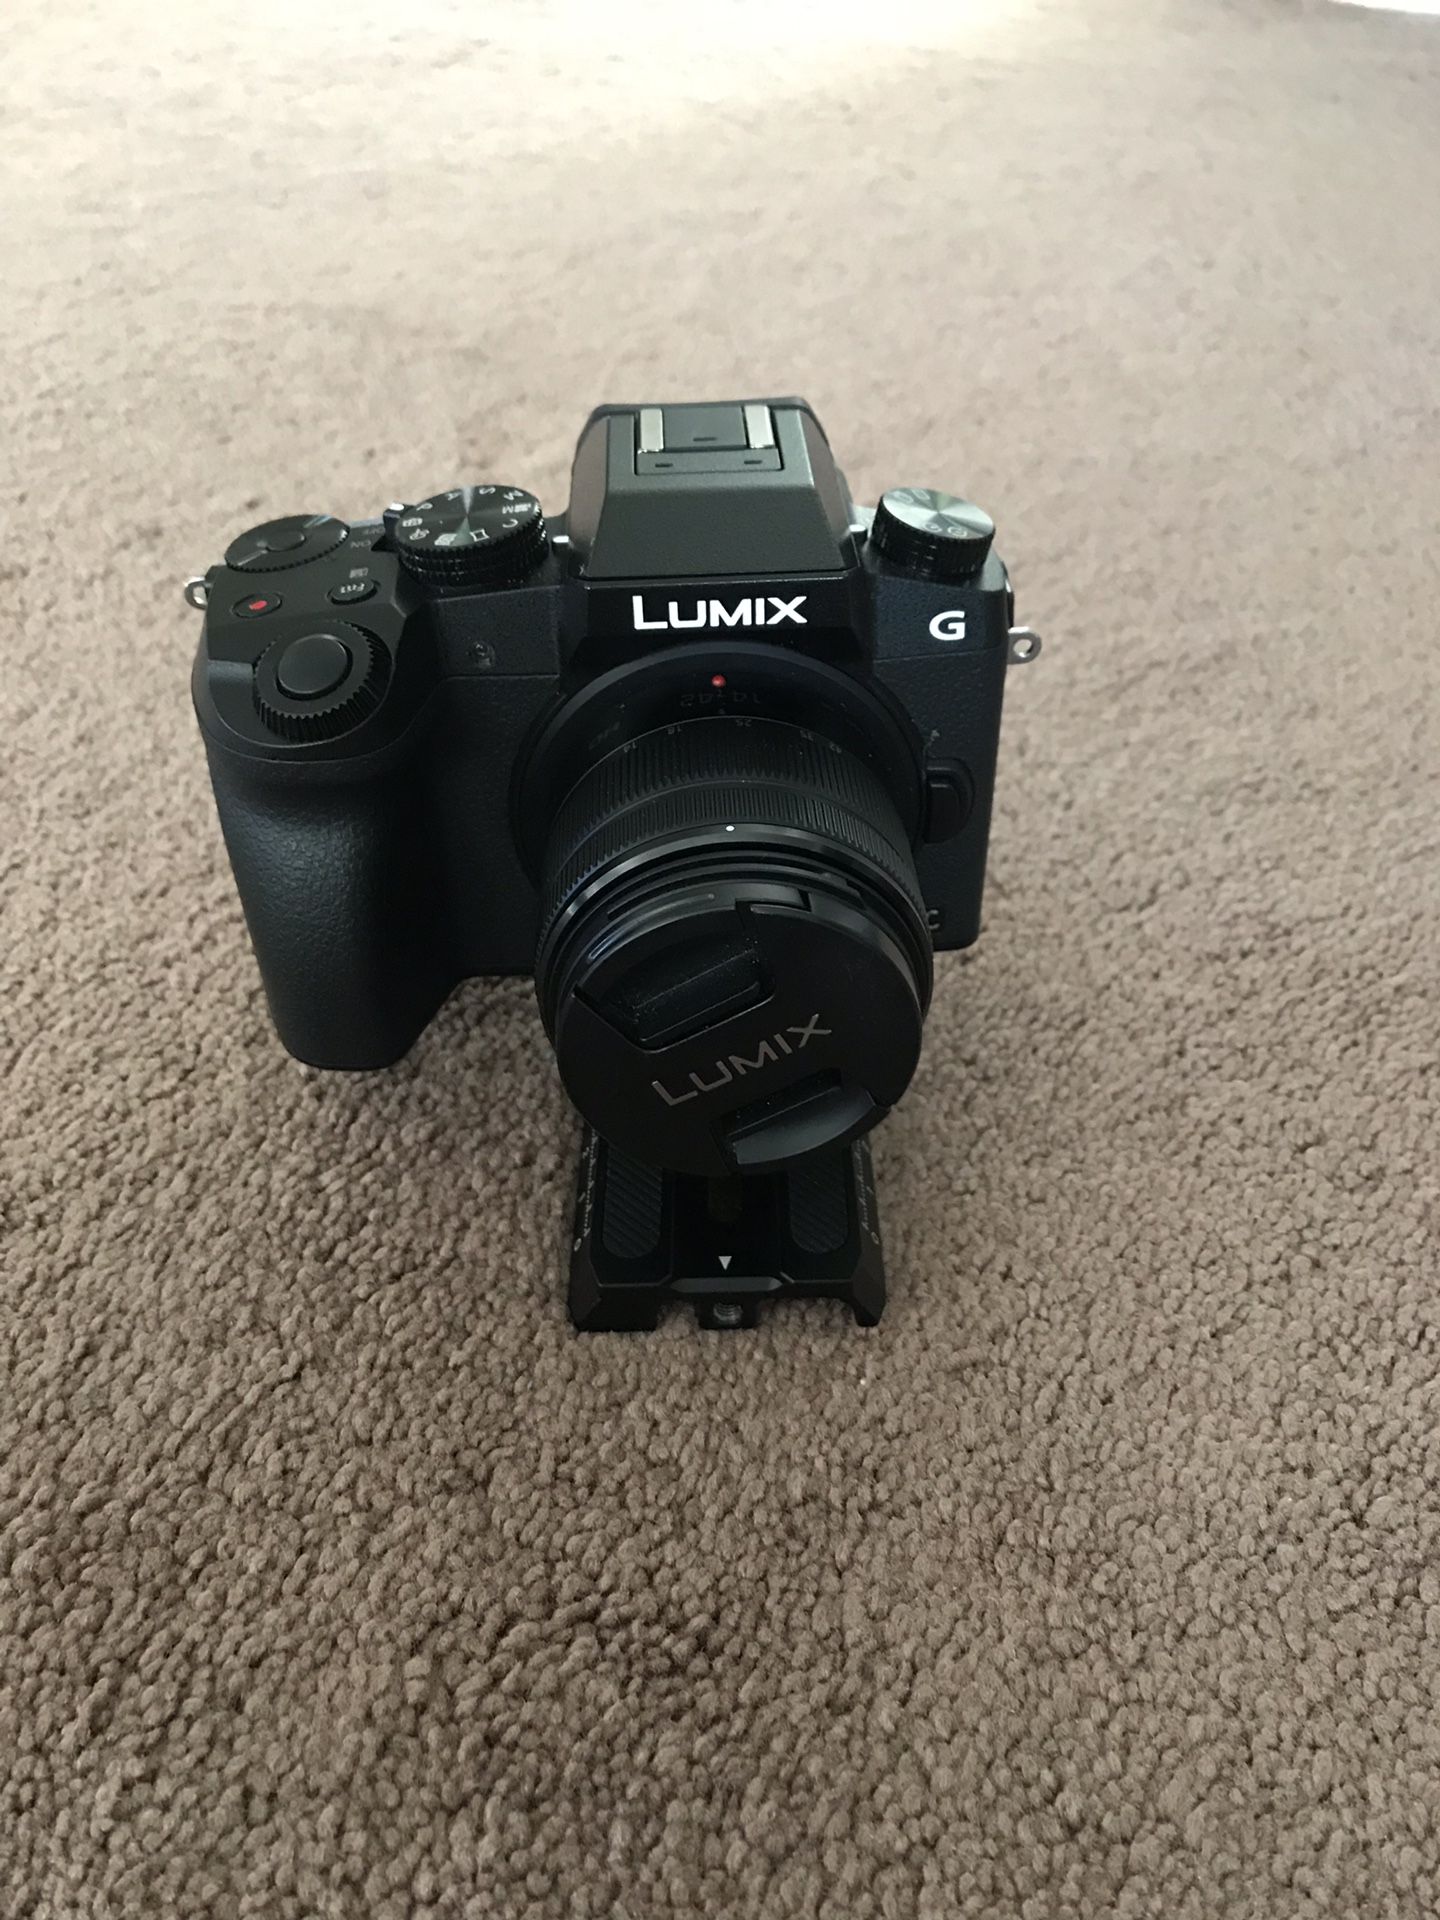 Panasonic Lumix G7 Camera